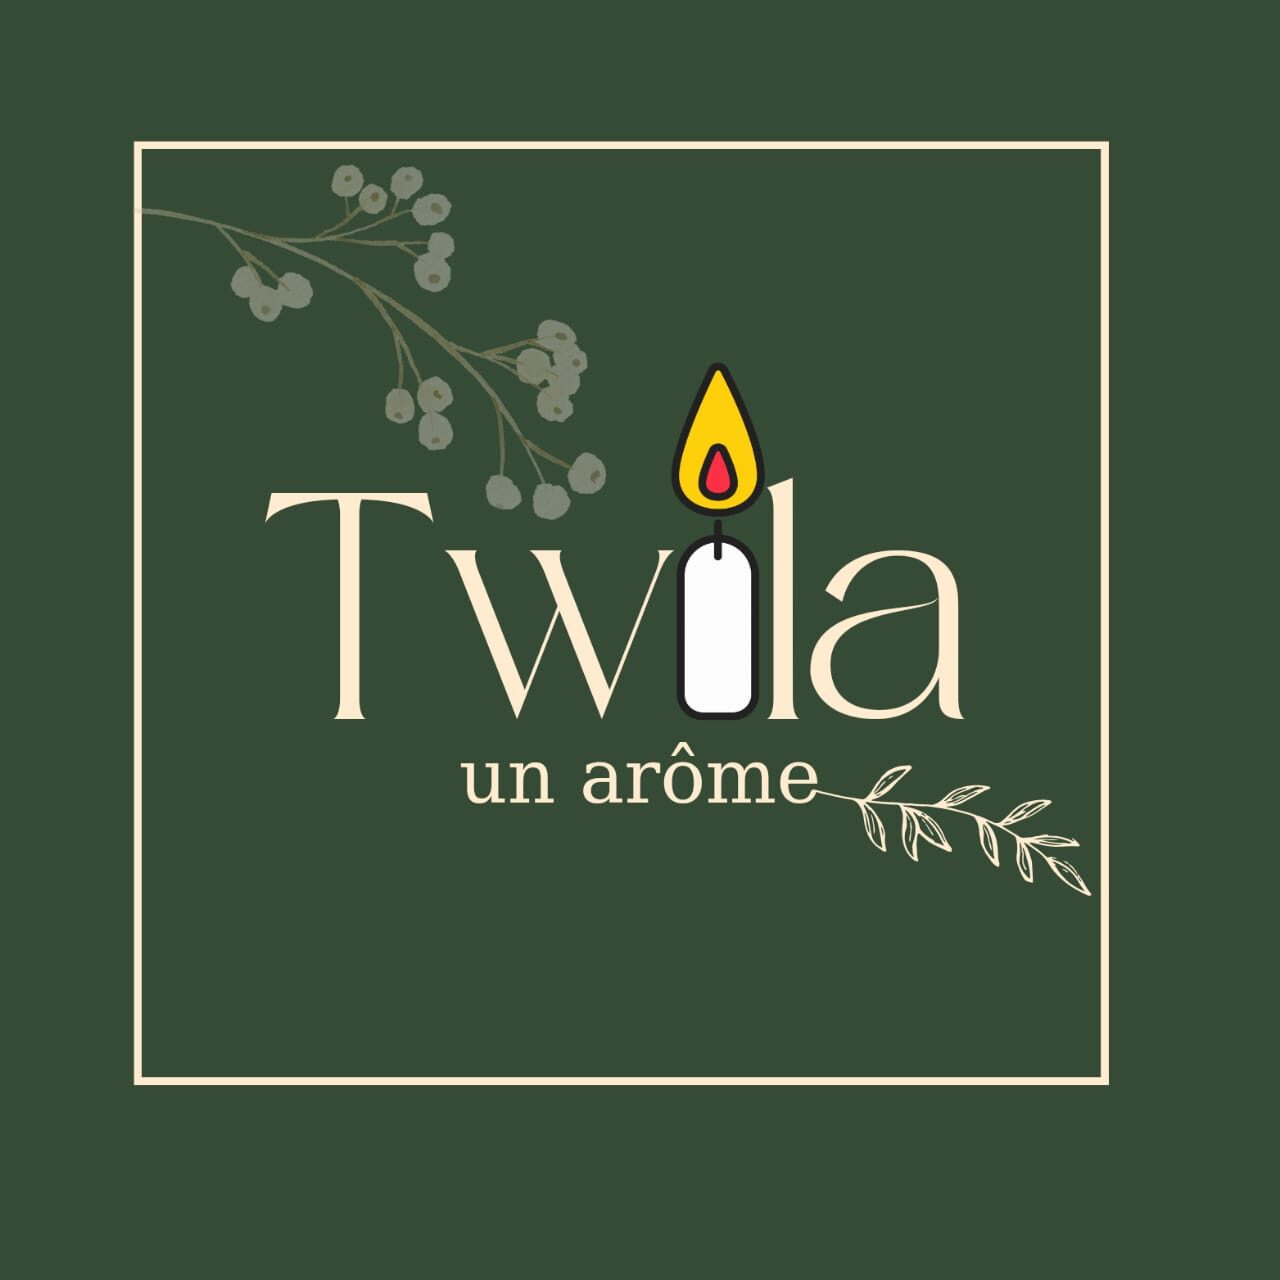 The Twila